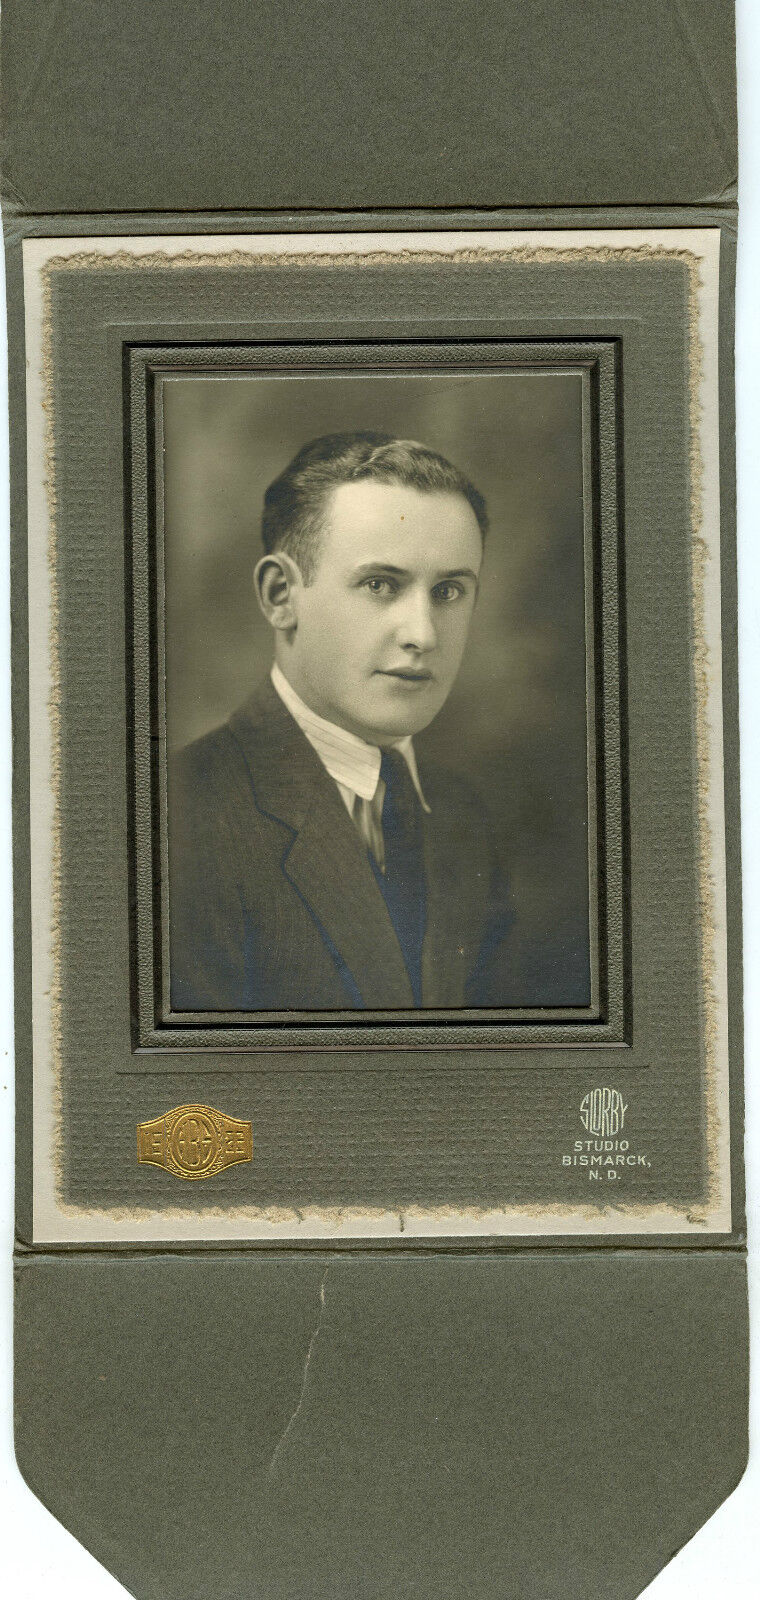 1926 Antique Studio Photo in Folder-Bismark, North Dakota Young Man (High School